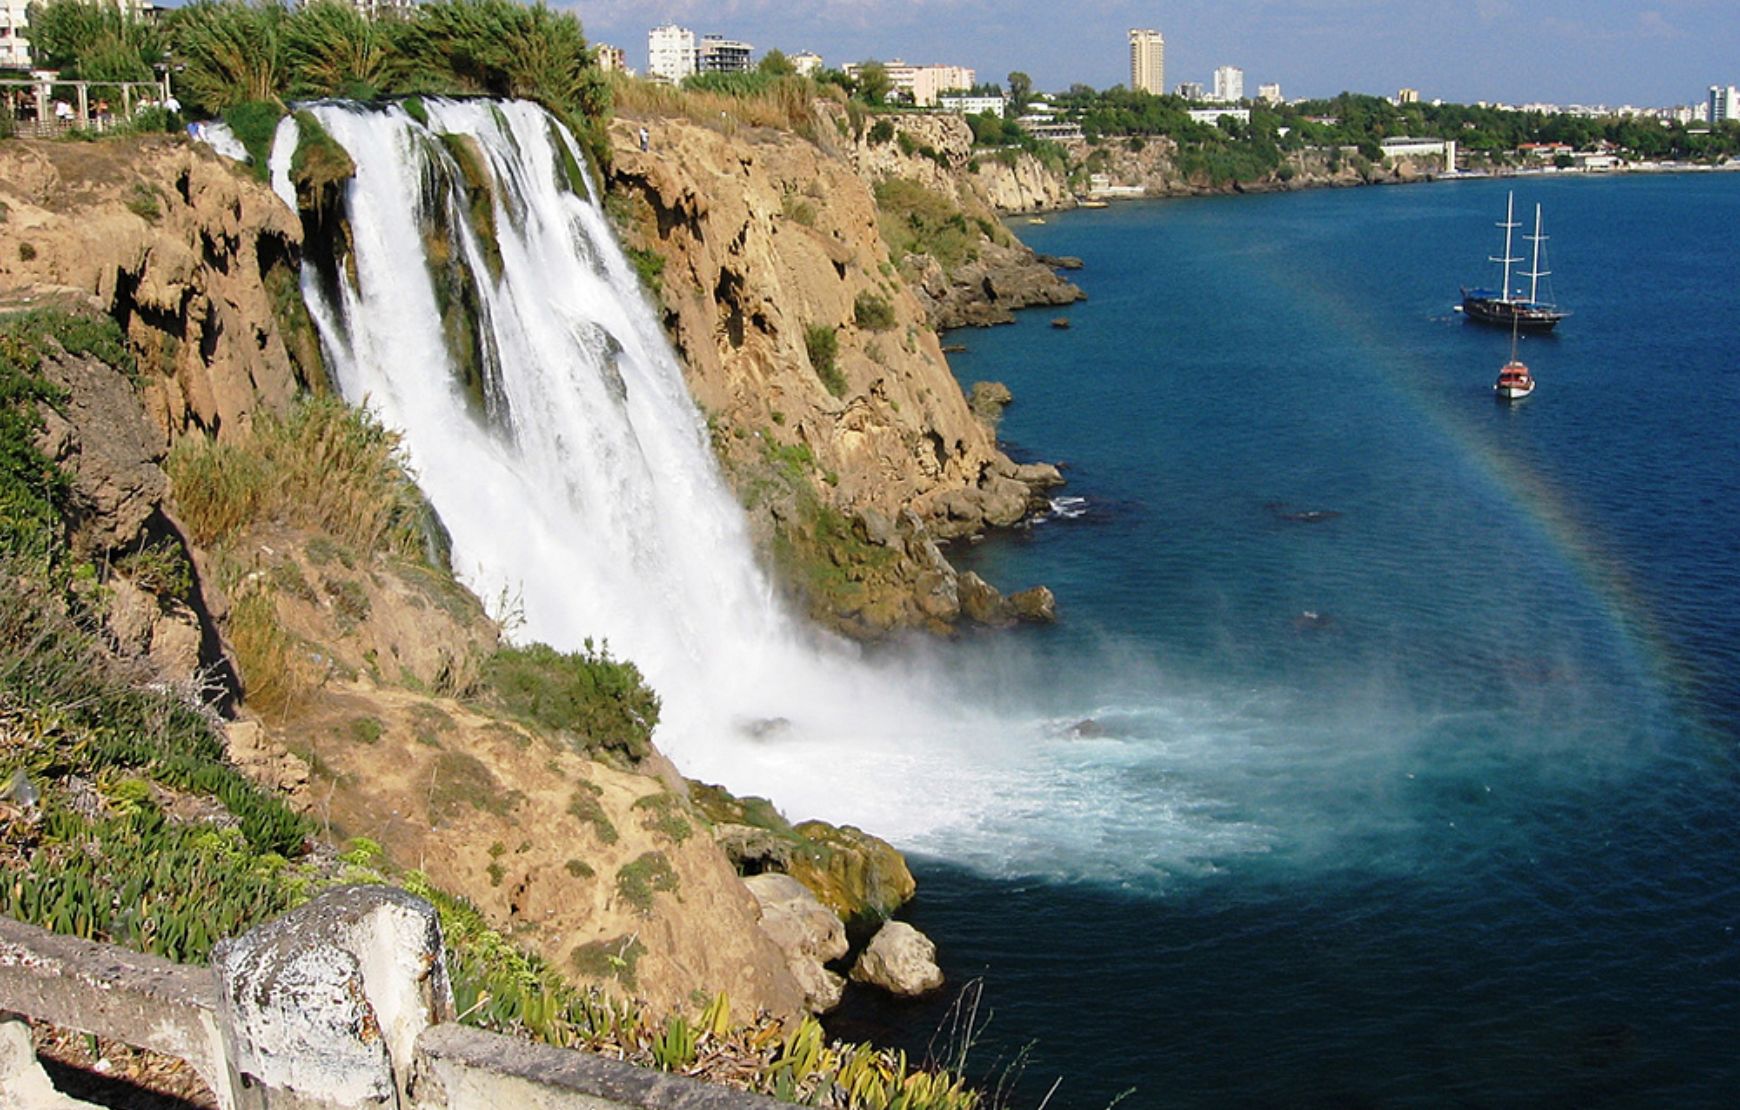 Karpuzkaldiran Waterfall in Antalya